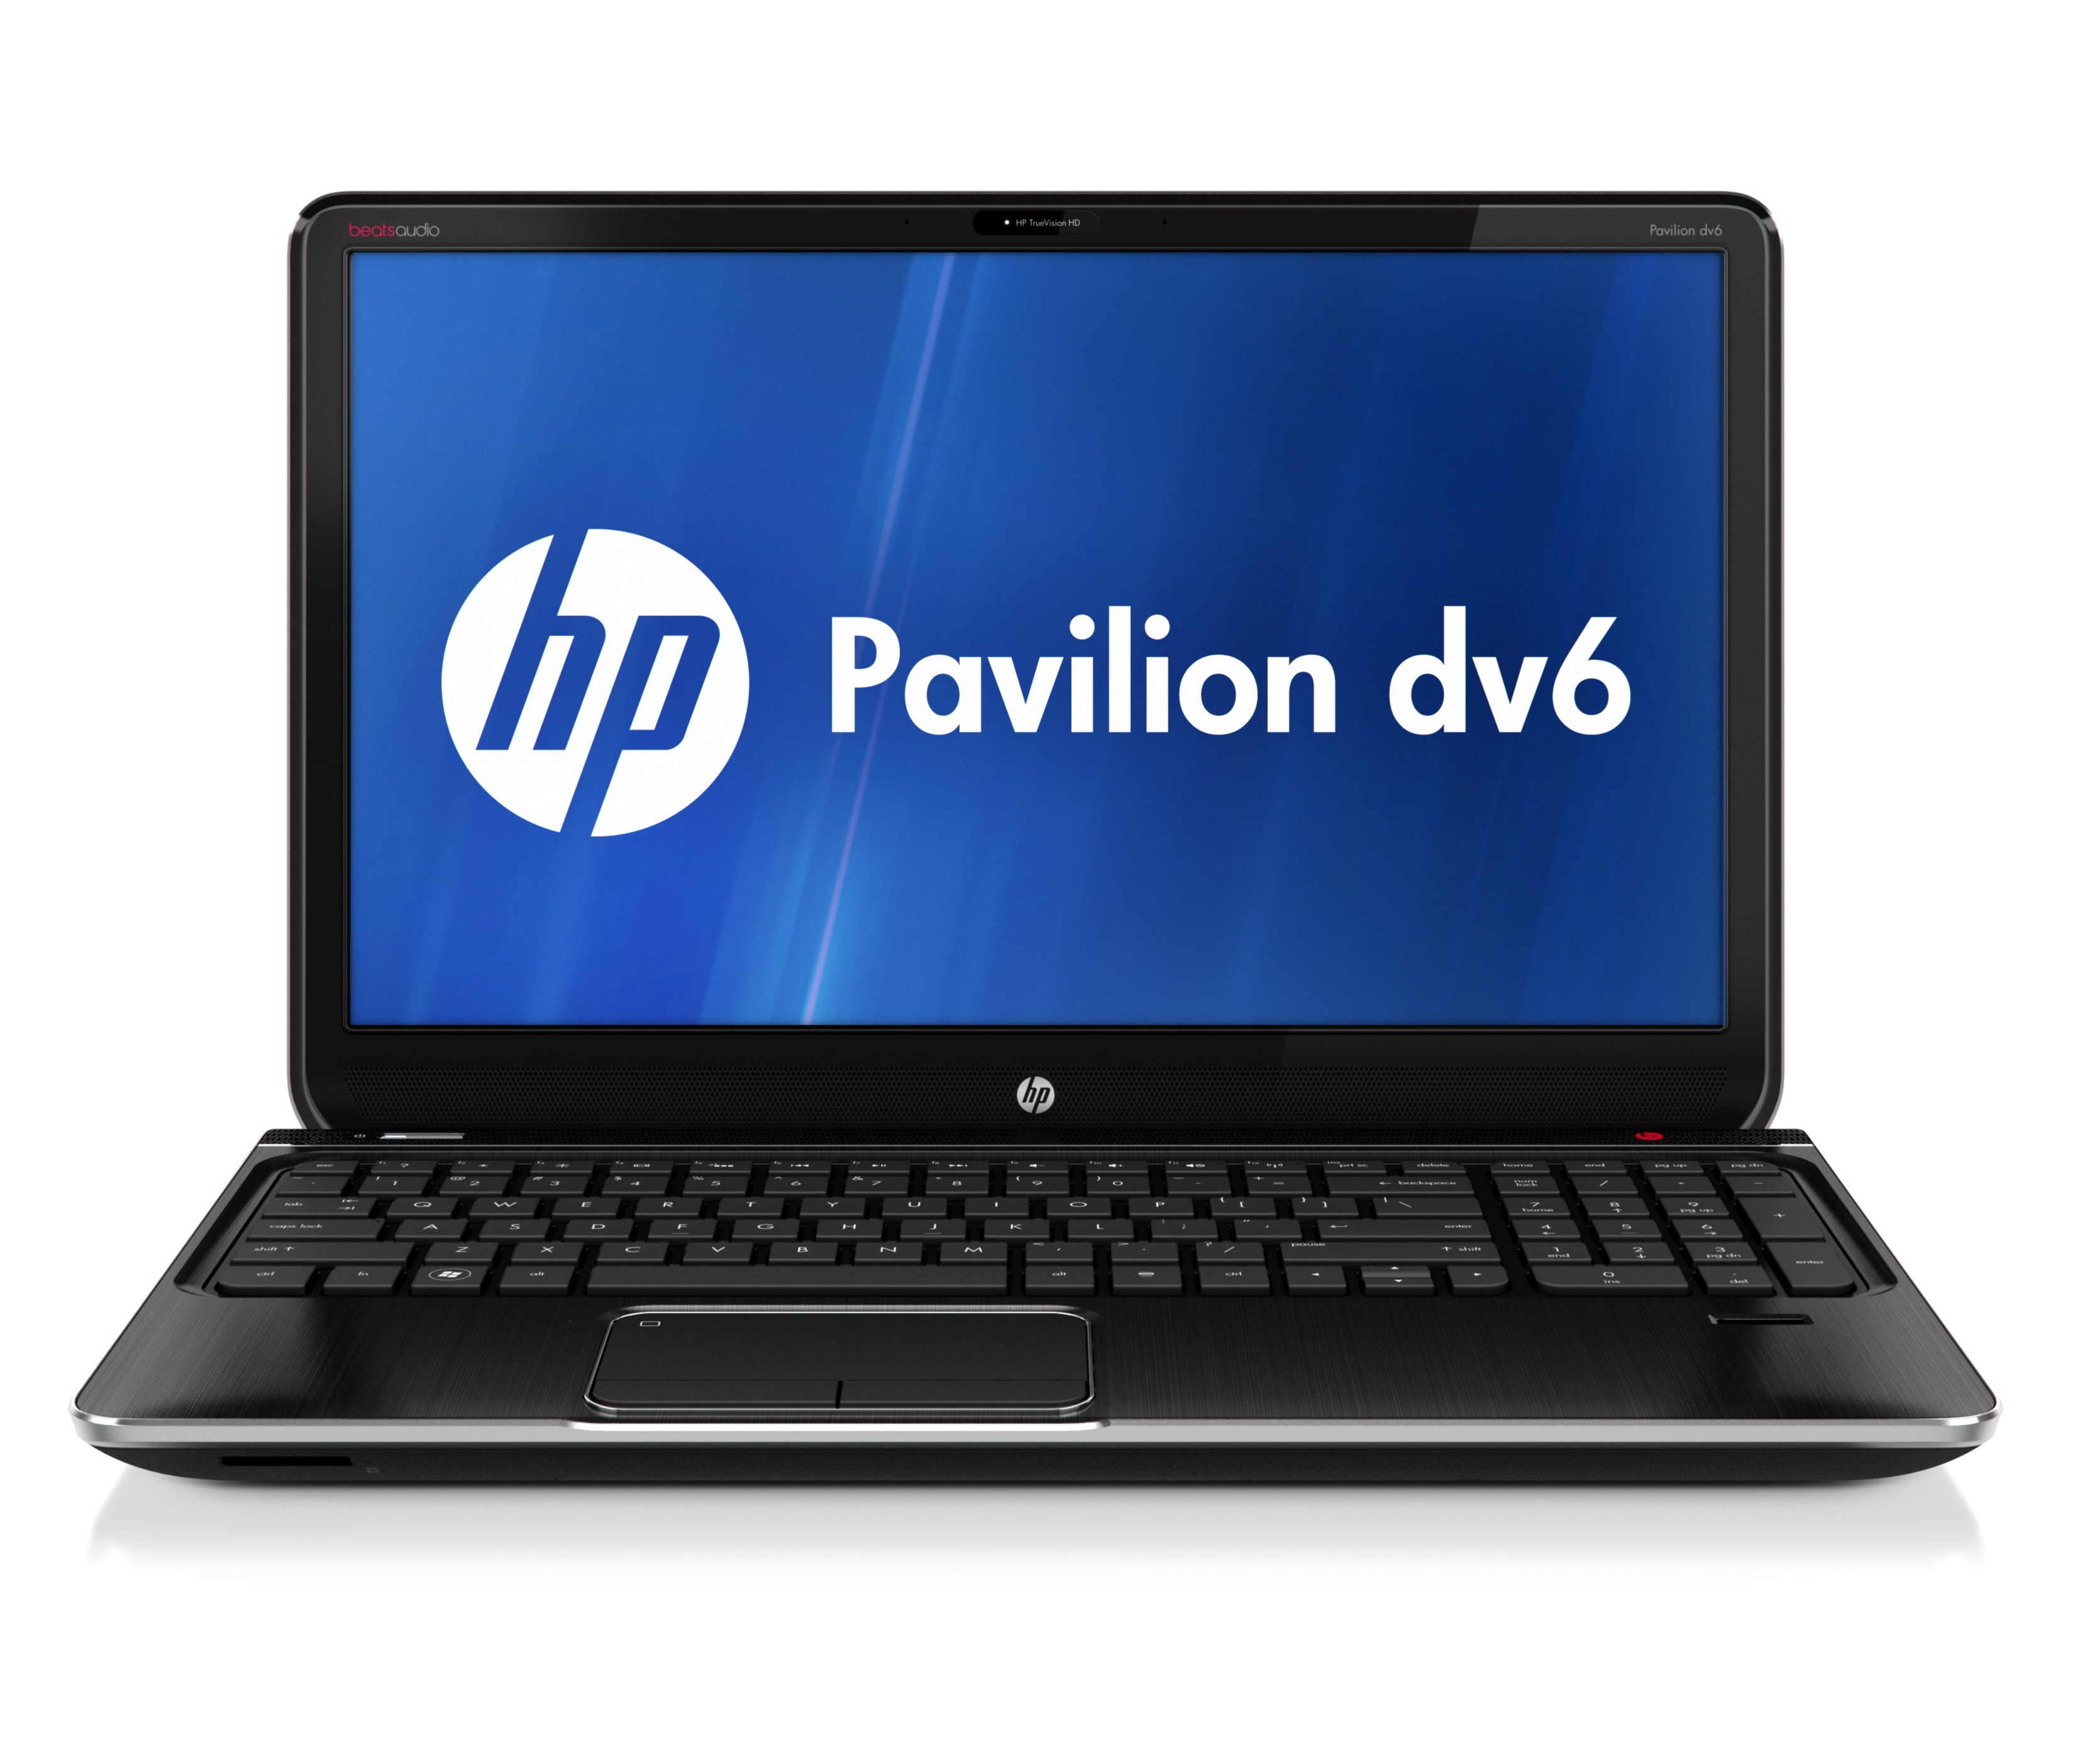 Specs Hp Pavilion Dv6 7104ea 39 6 Cm 15 6 Hd 3rd Gen Intel Core I7 8 Gb Ddr3 Sdram 750 Gb Hdd Nvidia Geforce Gt 630m Wi Fi 4 802 11n Windows 7 Home Premium Black Notebooks B6k60ea